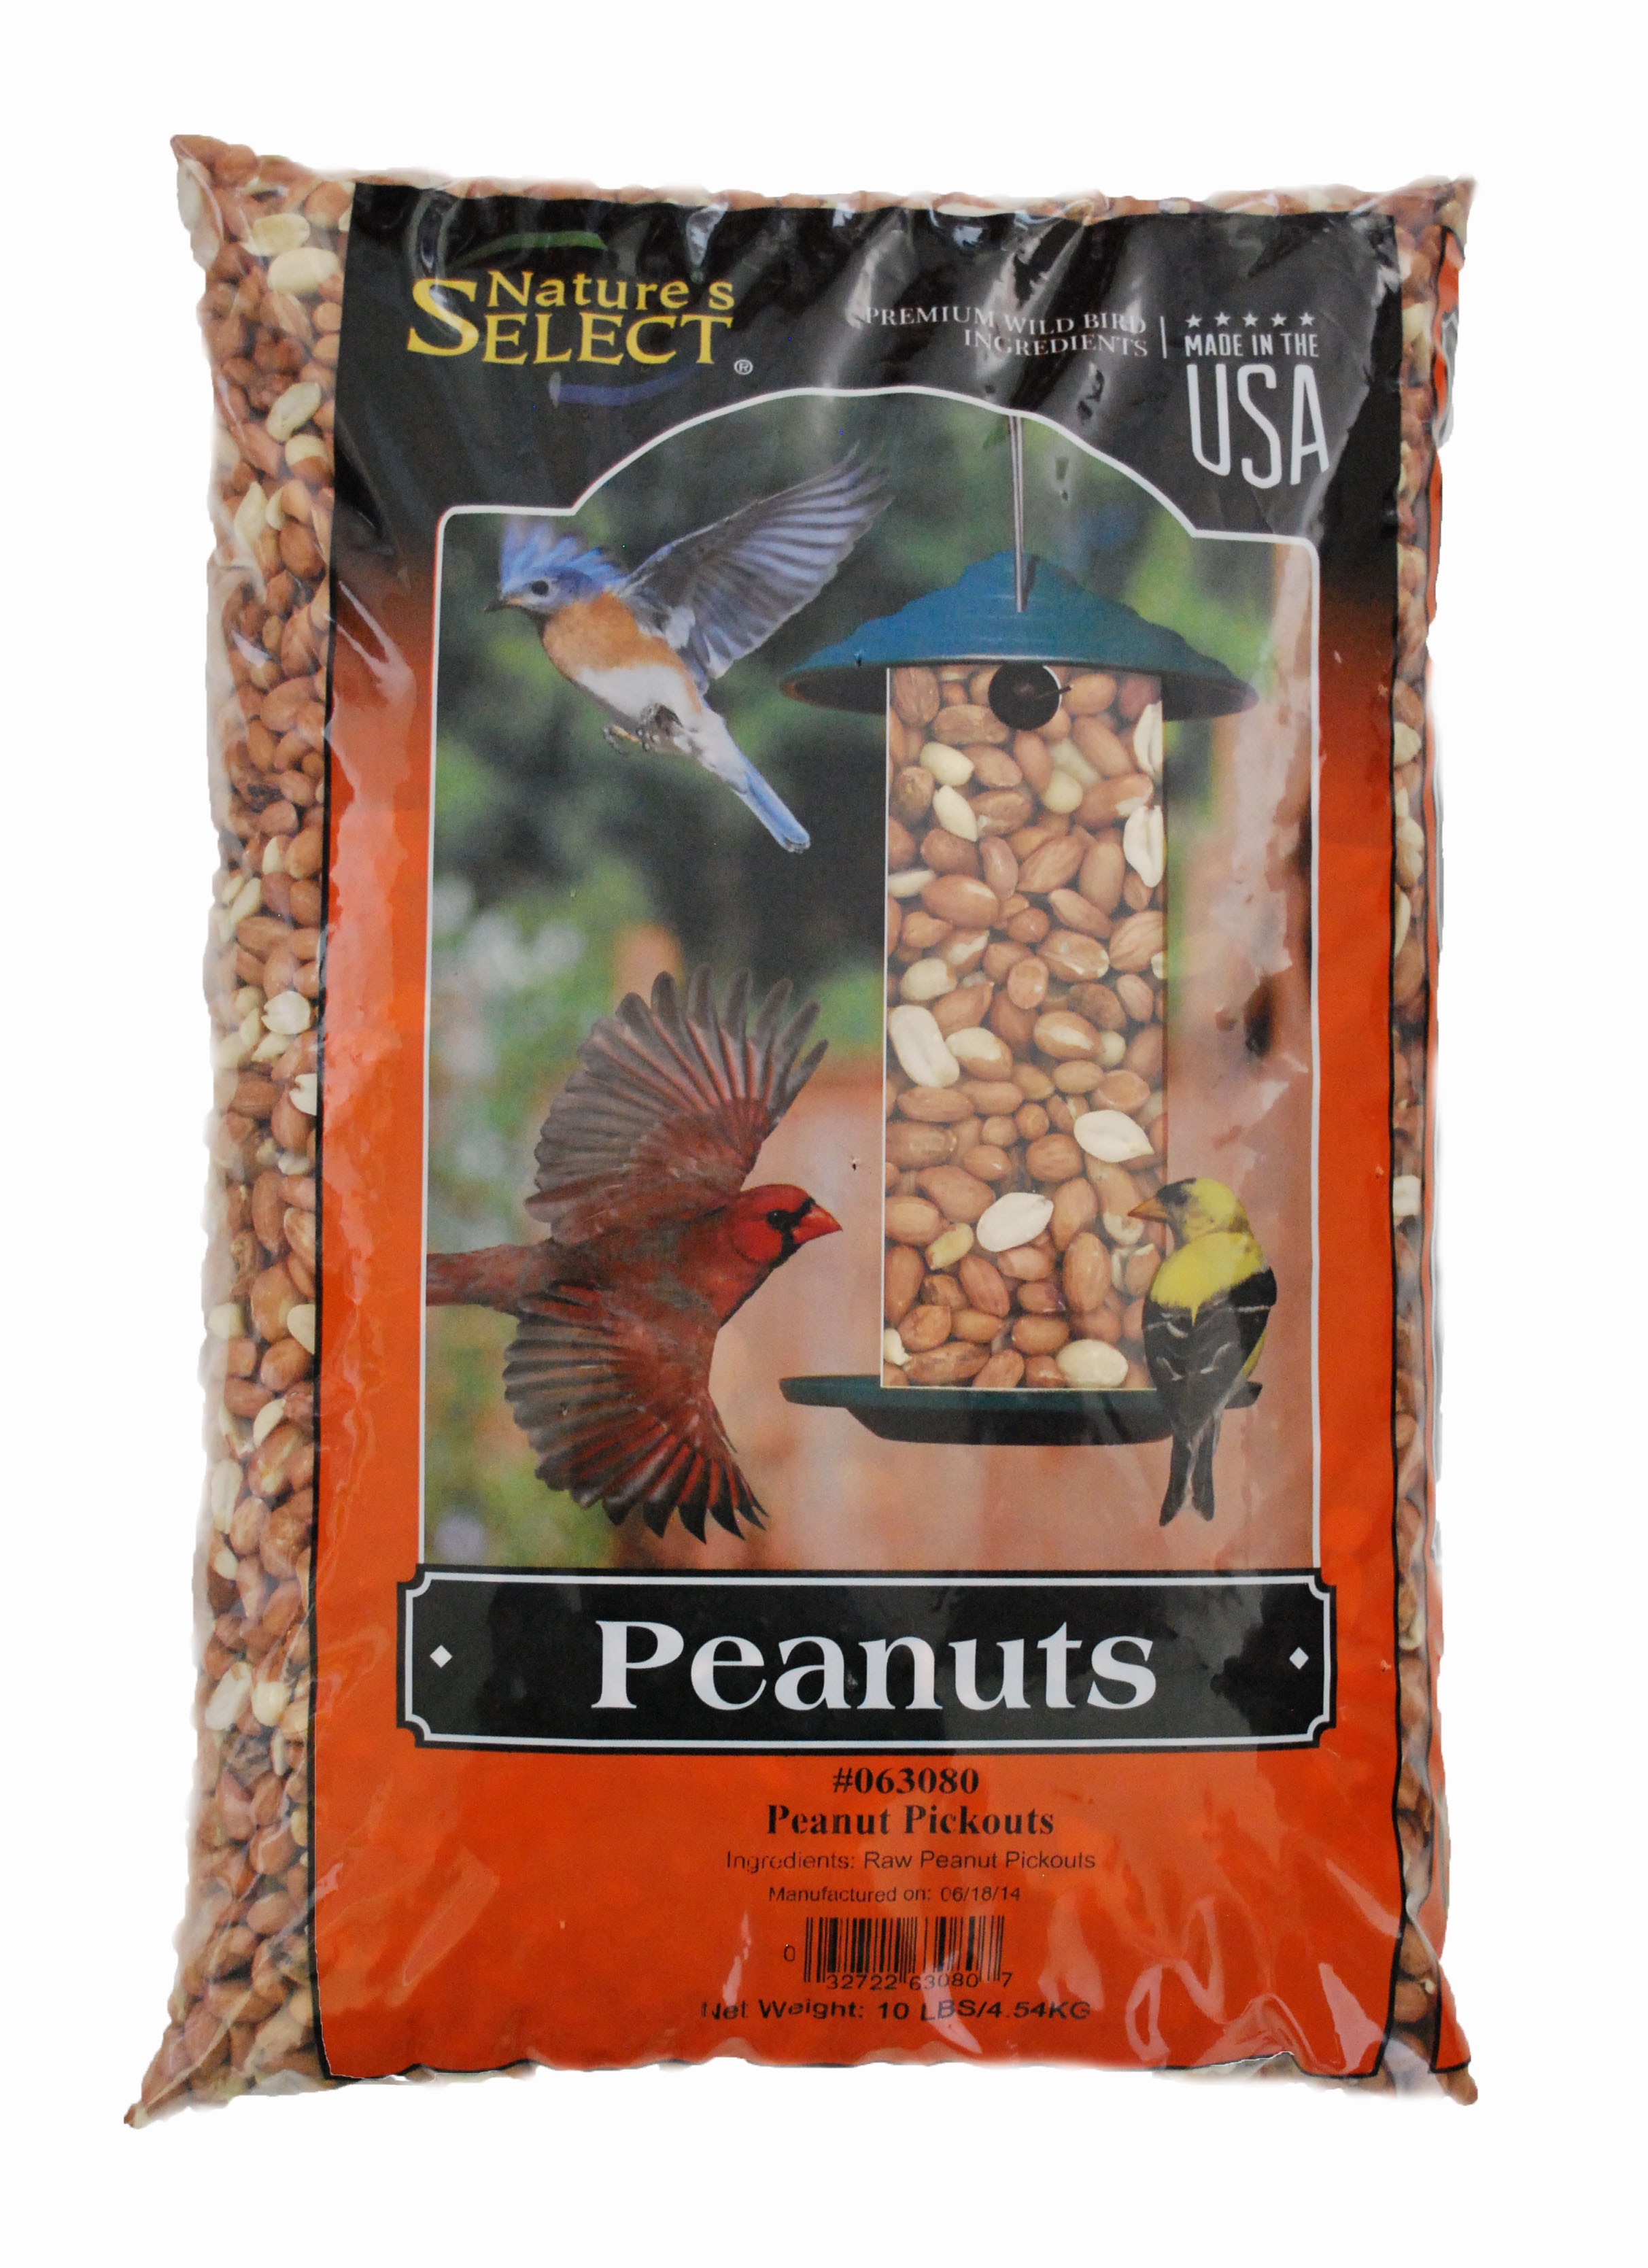 Nature's Select Peanut Pickouts, 10 LB